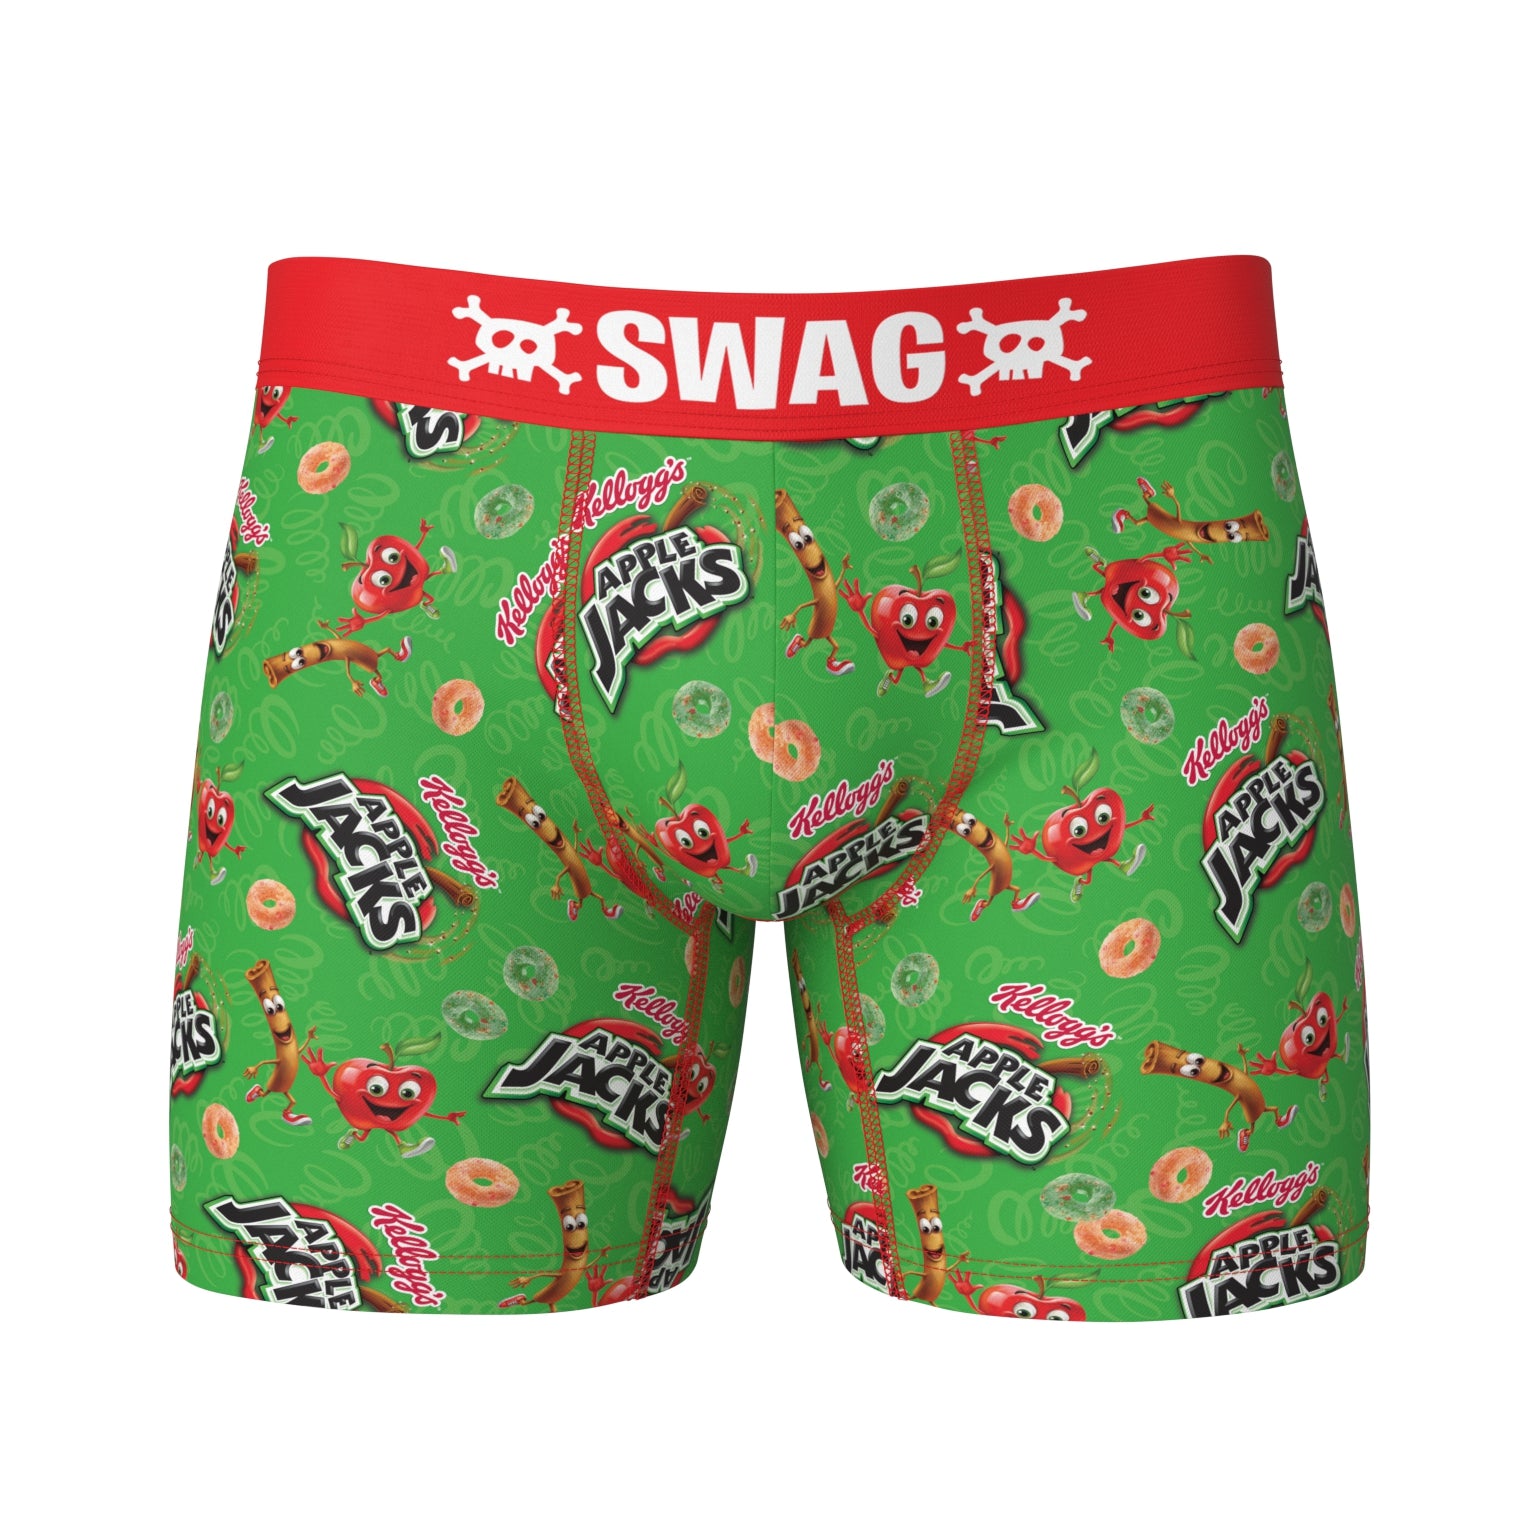 SWAG - Kellogg's Apple Jacks Boxers – SWAG Boxers